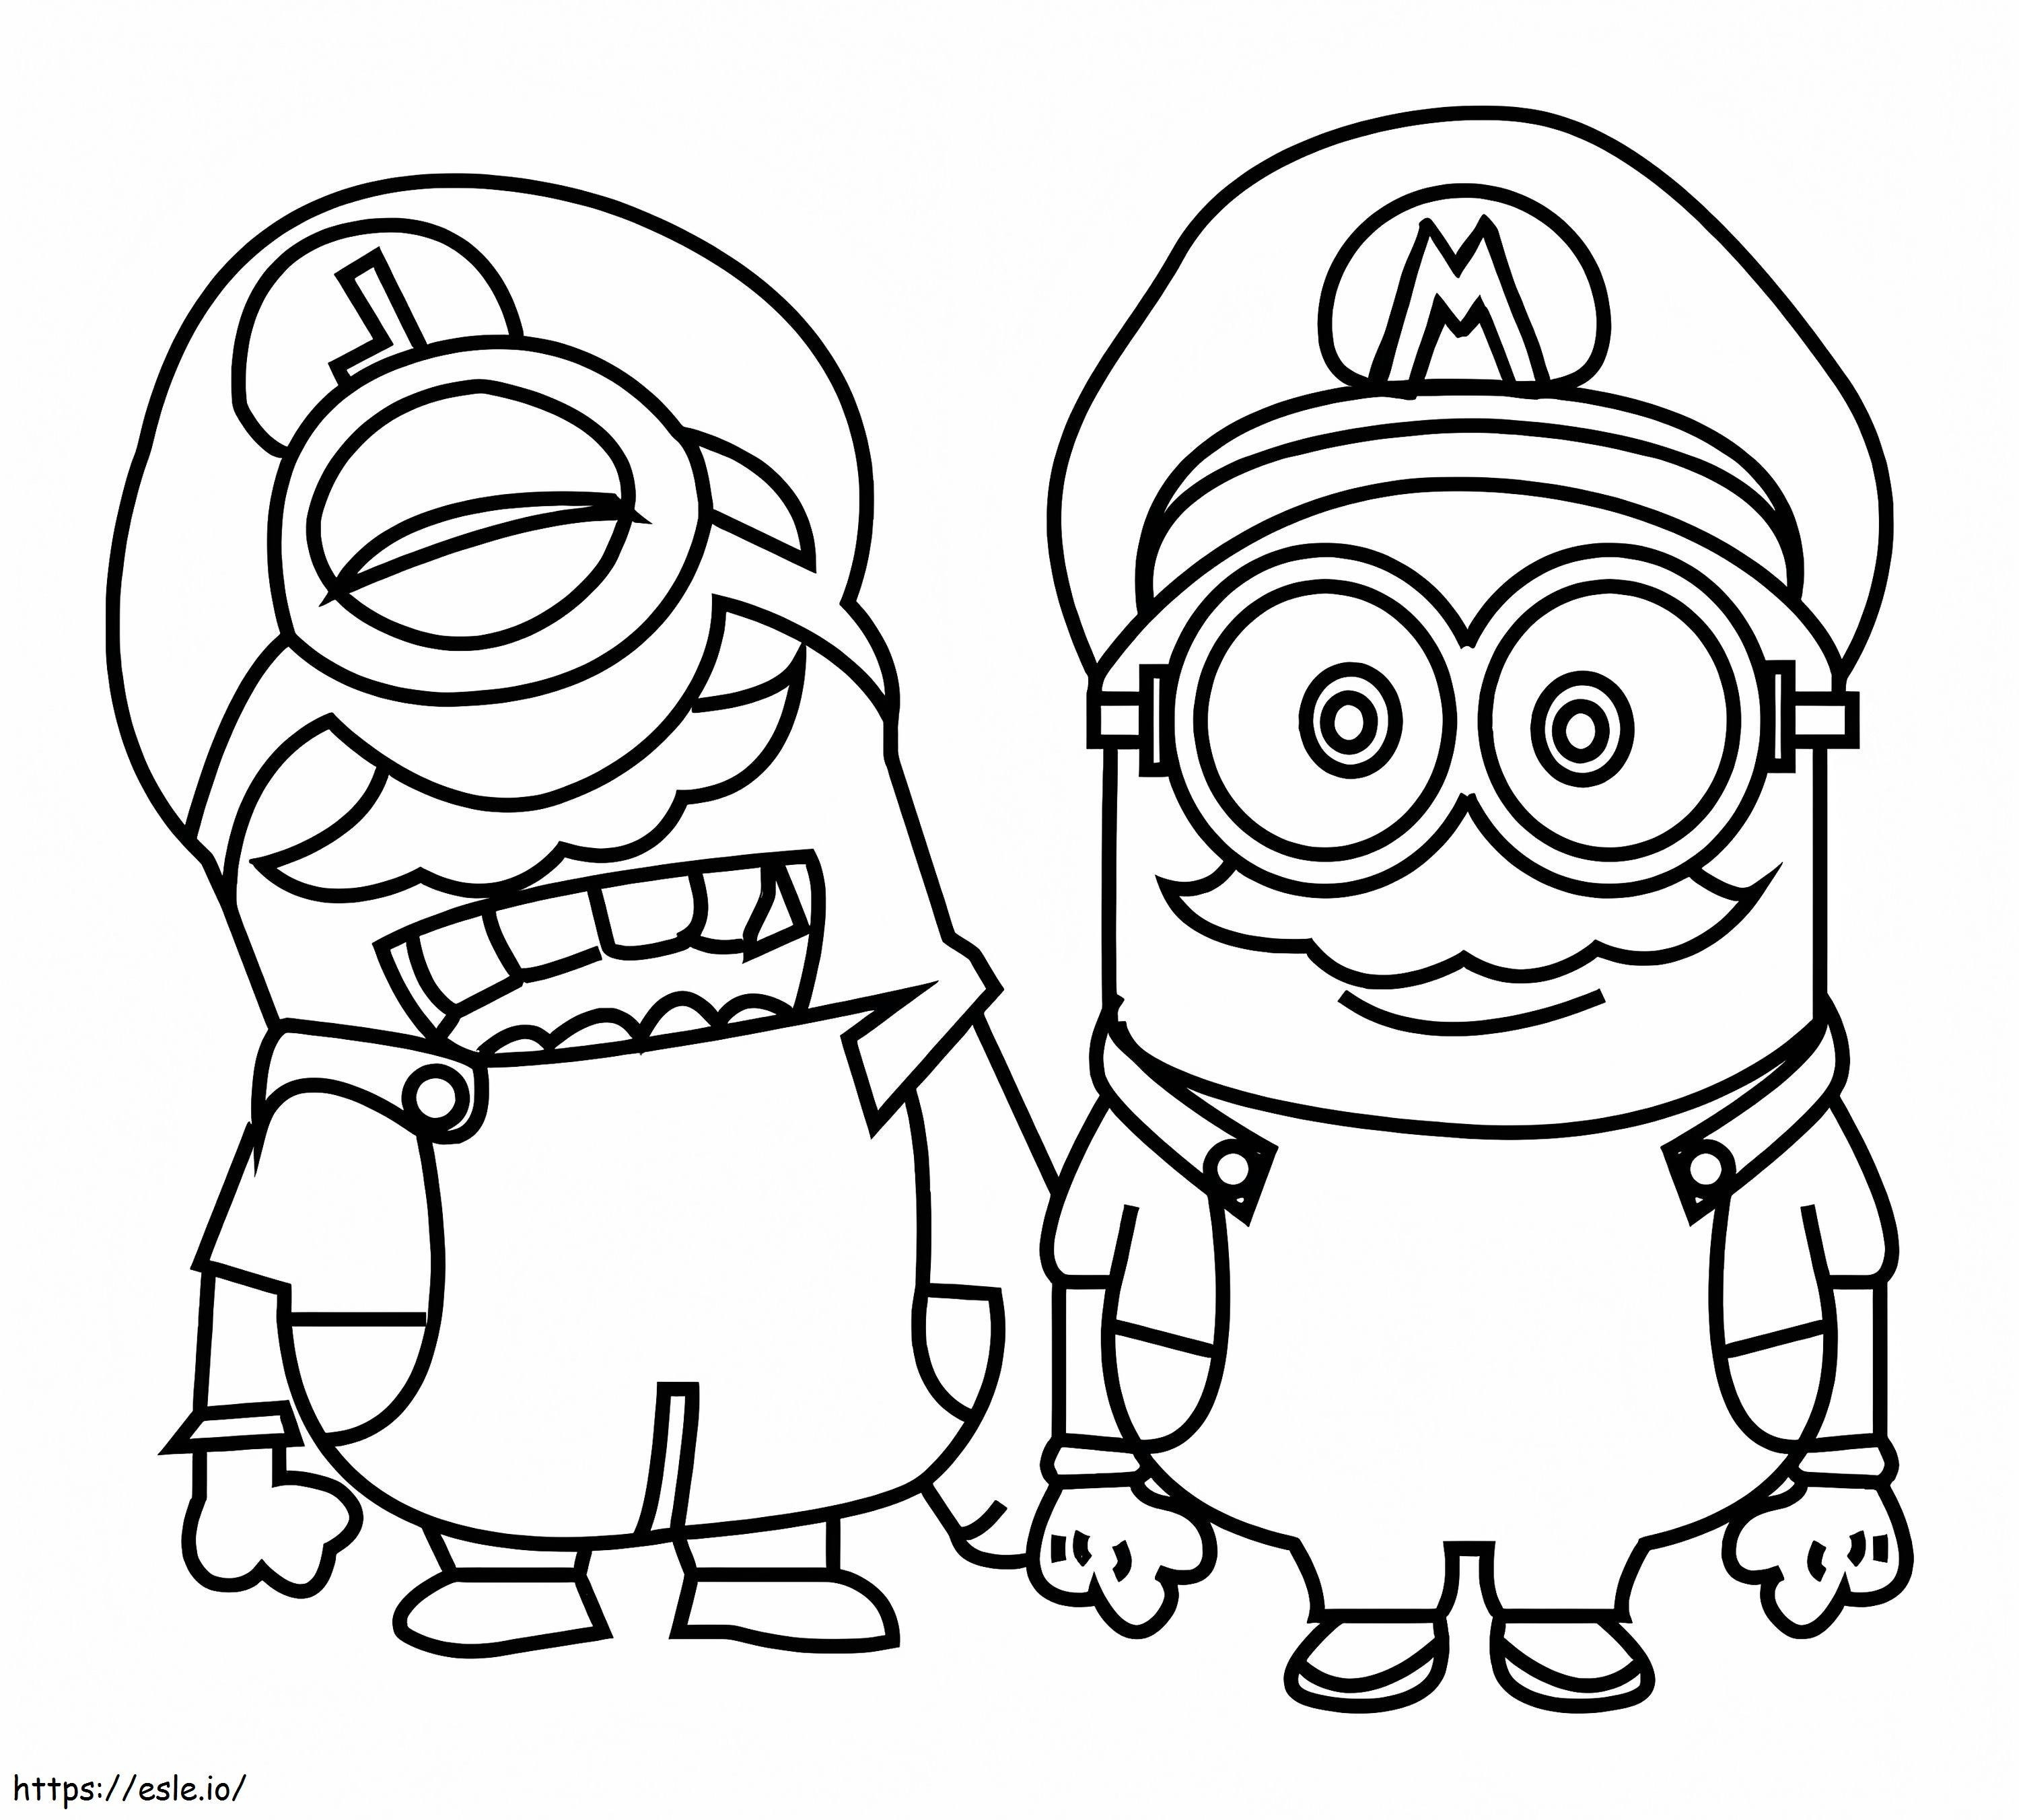 Coloriage Minion Luigi et Minion Mario à imprimer dessin